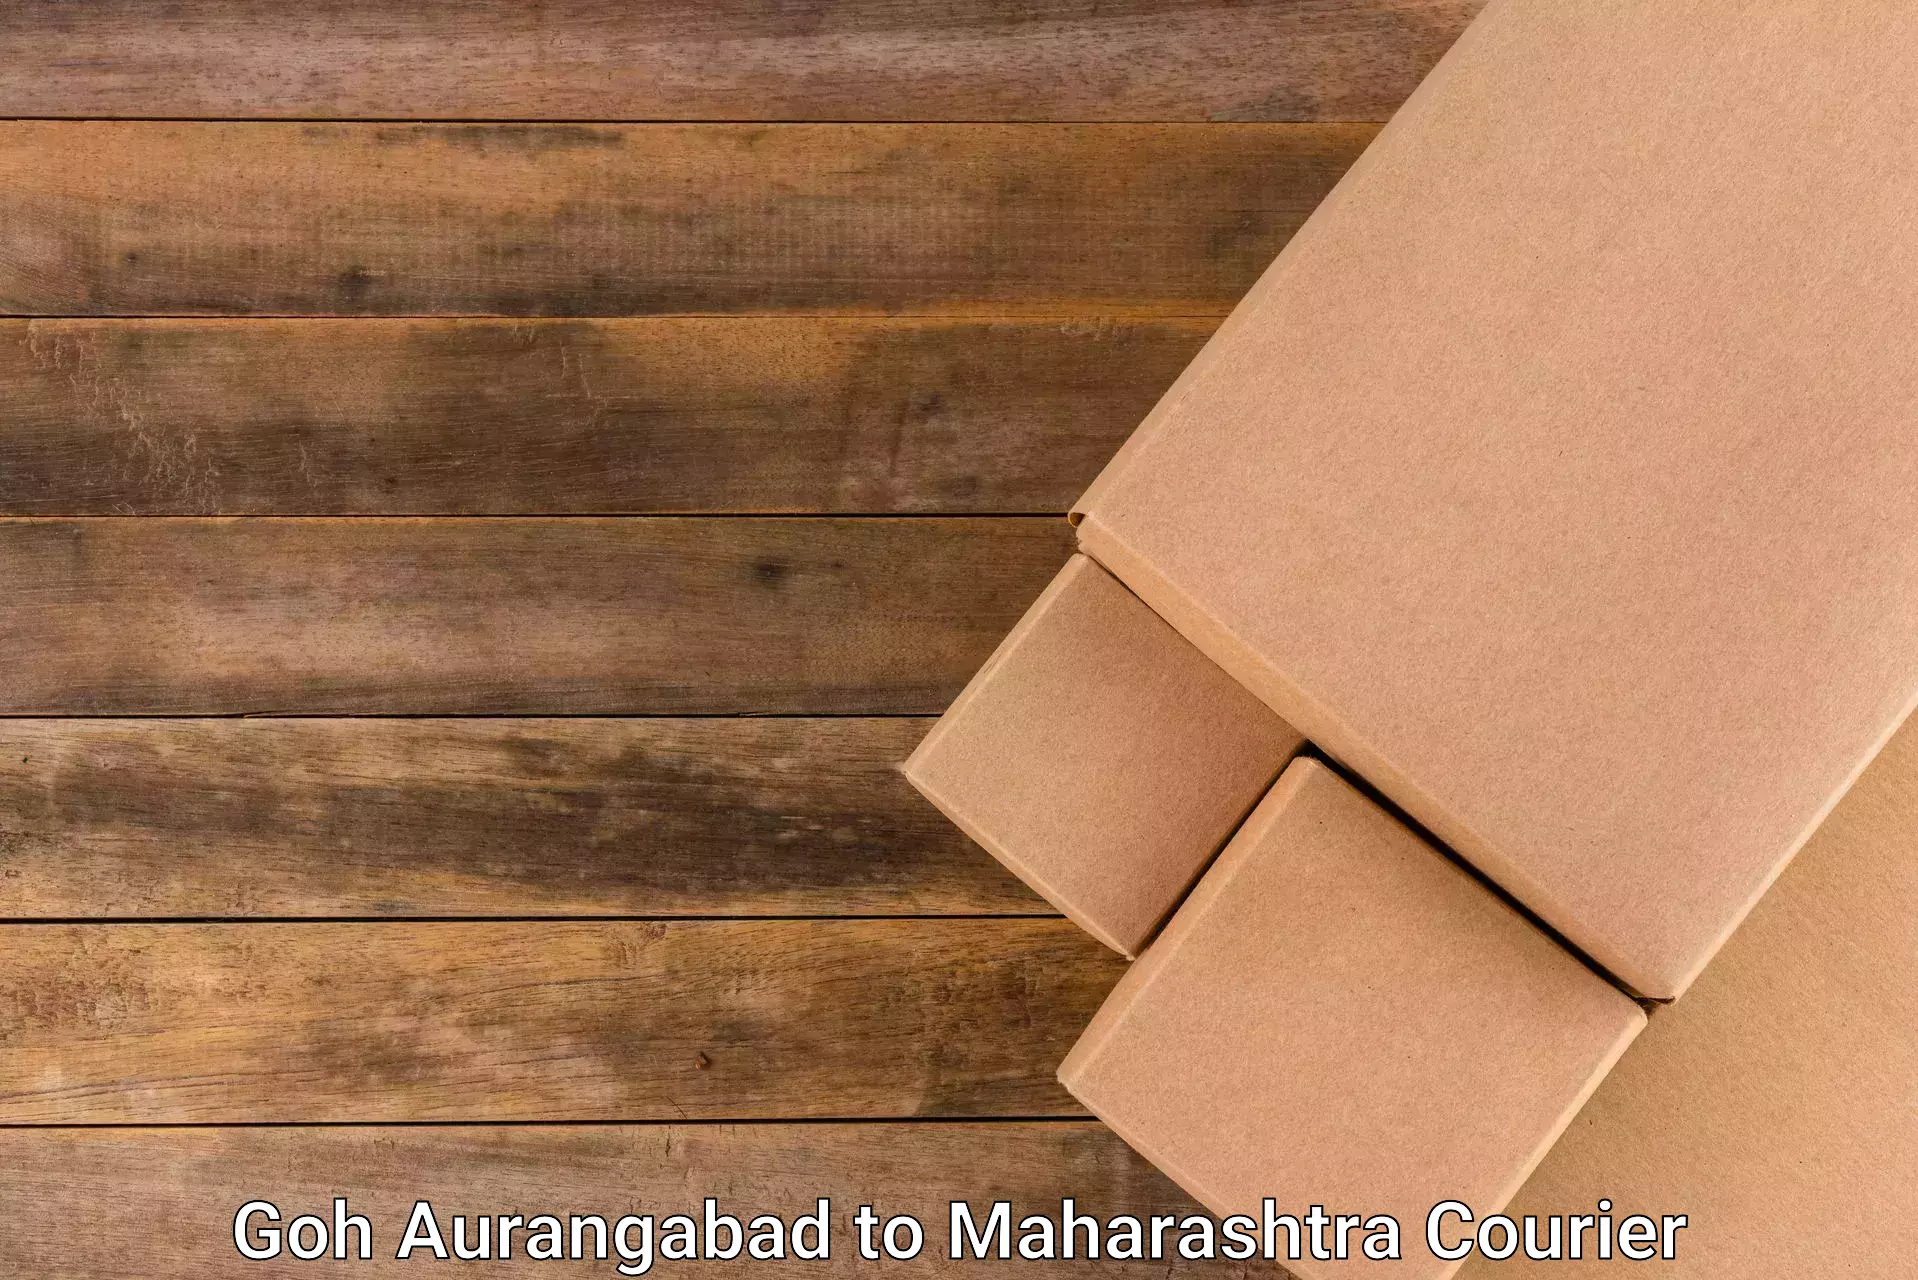 24-hour courier service Goh Aurangabad to Gangakher